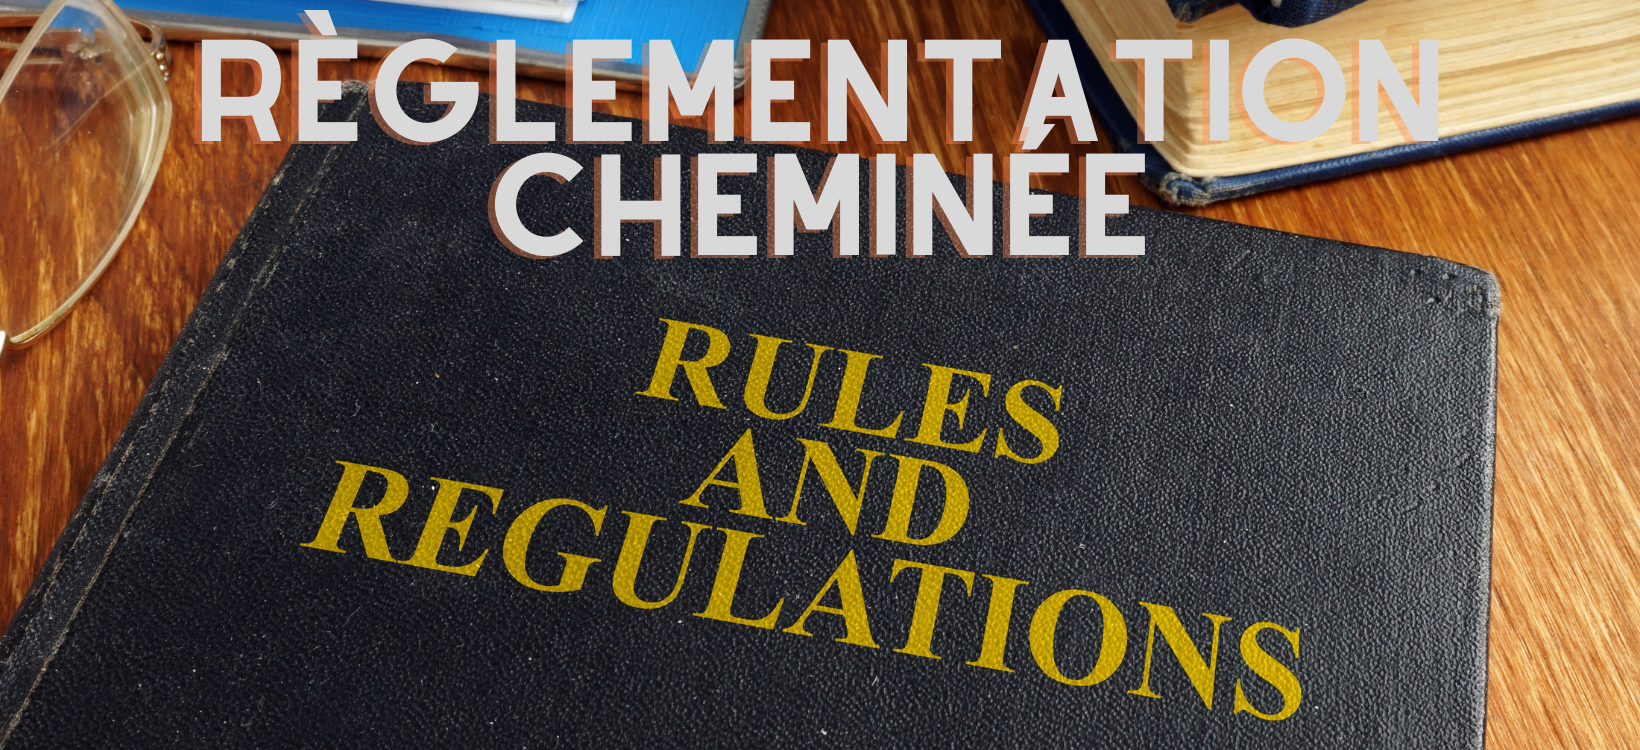 Reglementation cheminee 1